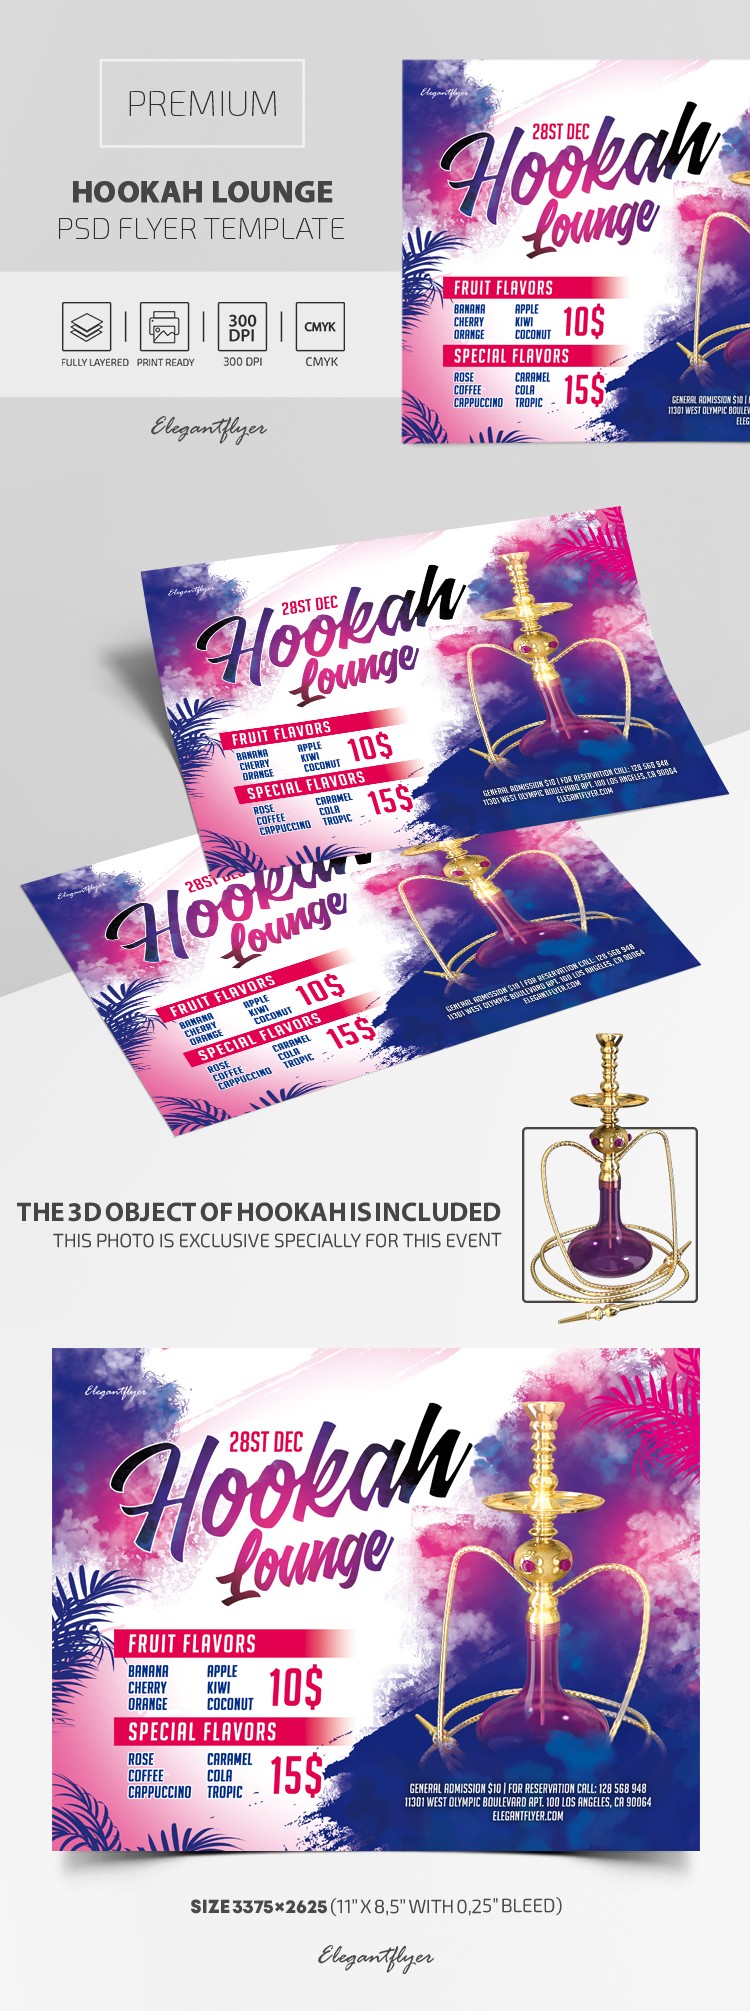 Hookah Lounge - Shisha-Lounge by ElegantFlyer